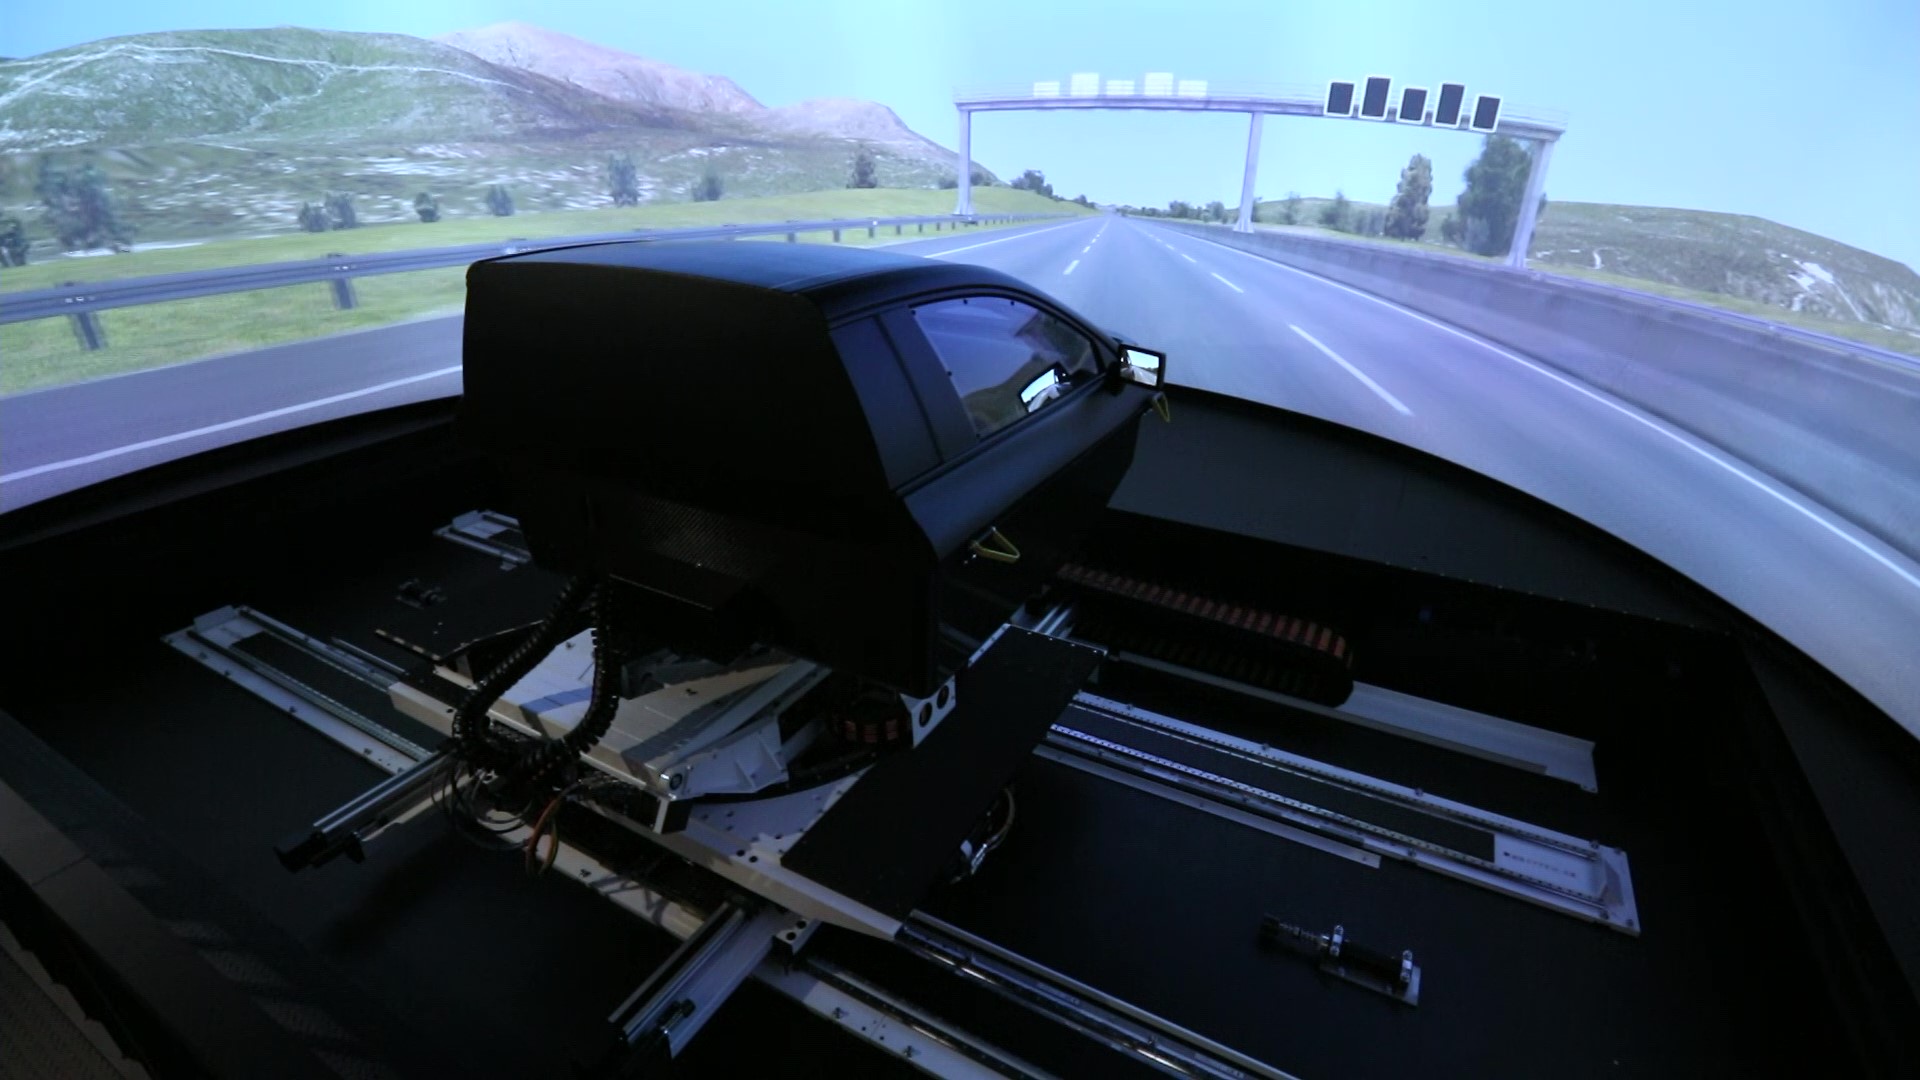 Building a simulator environment closer to a real car
